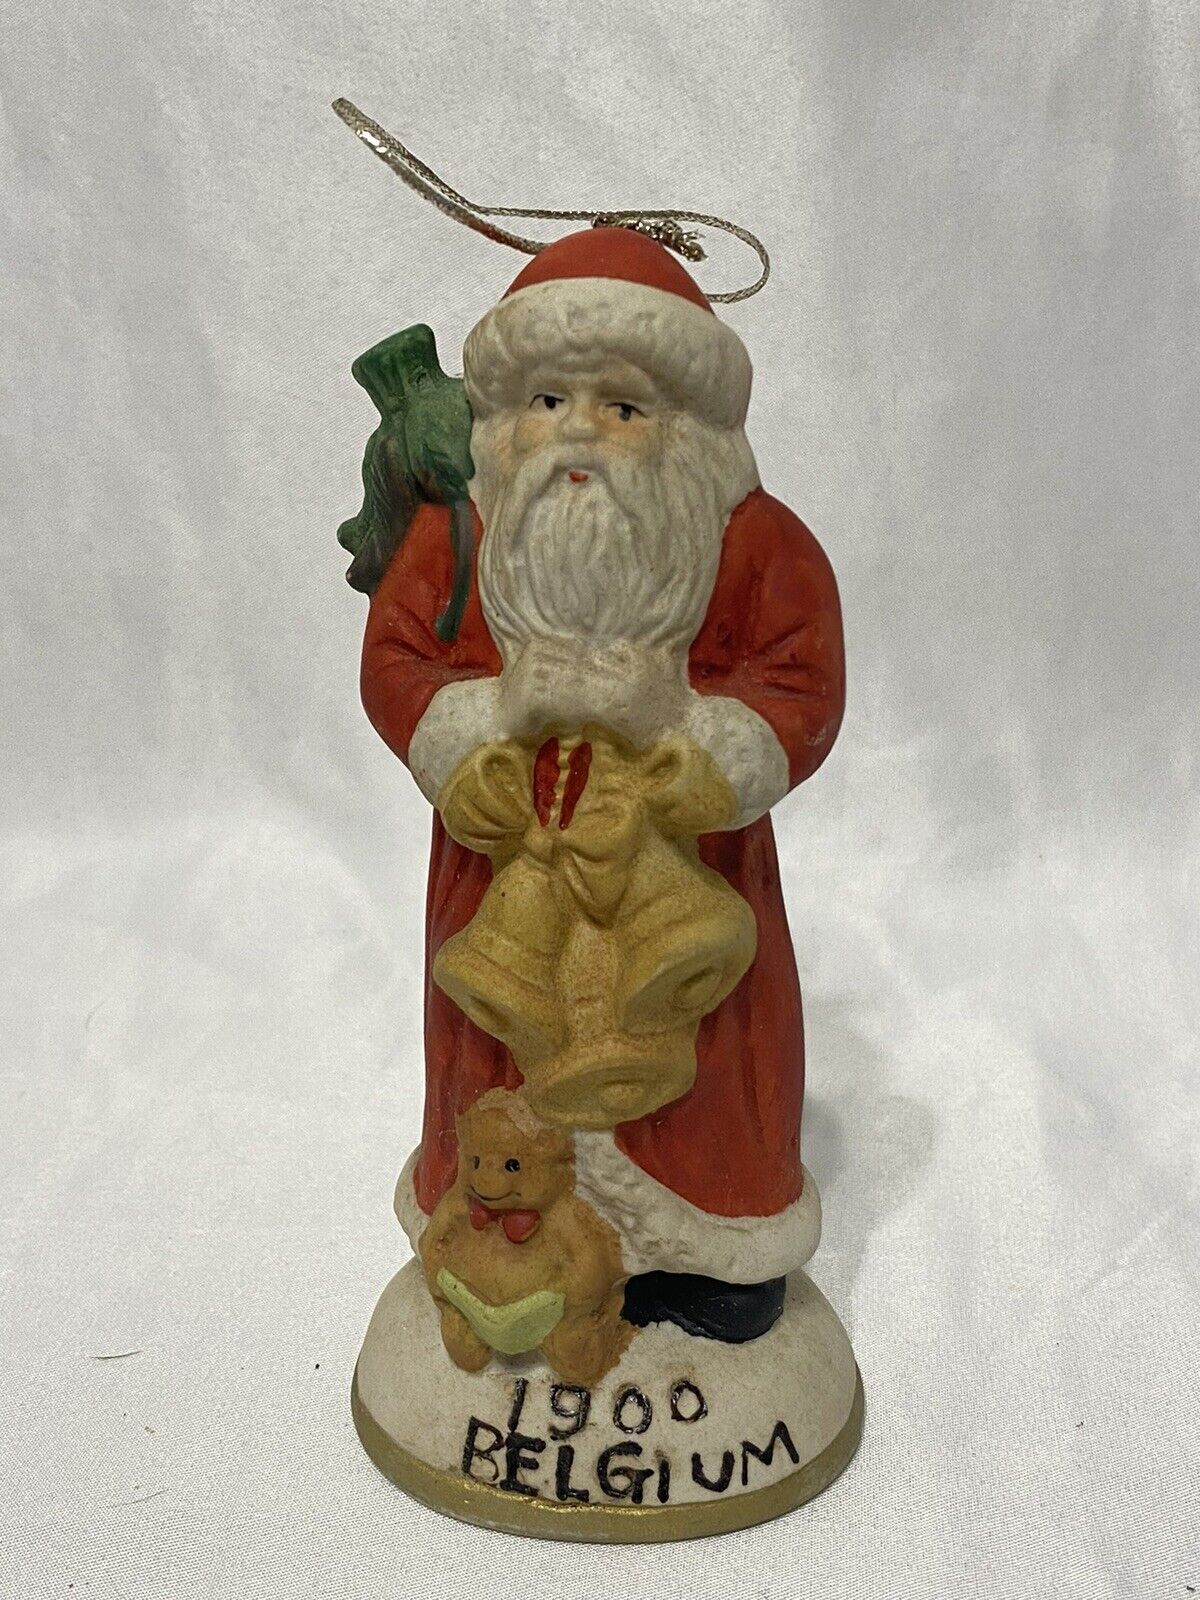 Vintage - 5.5” Santa Claus Belgium 1900 Christmas Figurine Holiday Ornament